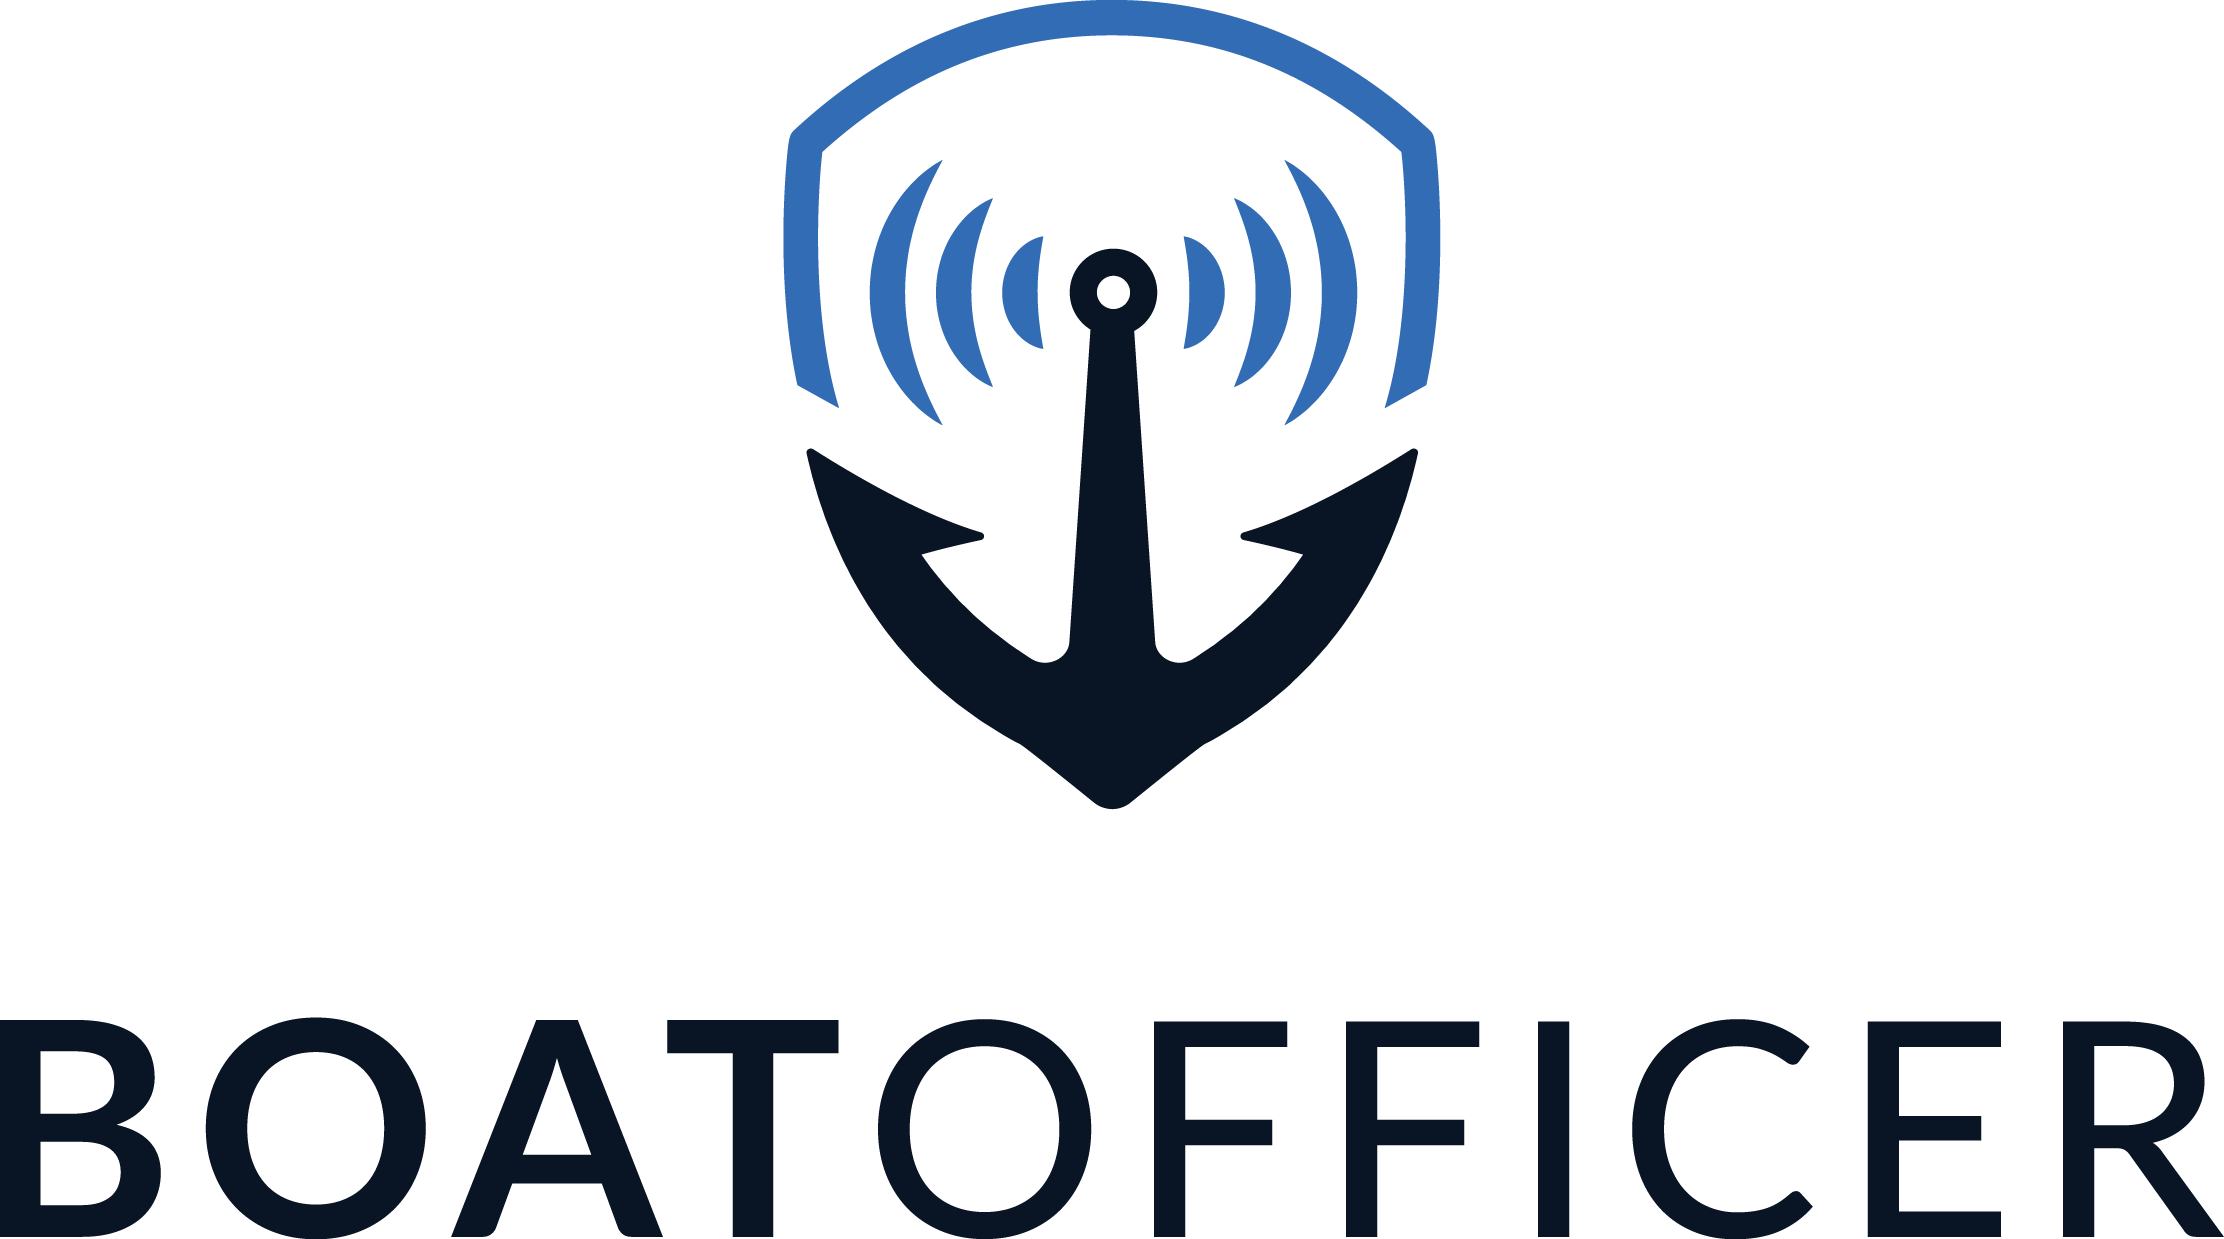 BoatOfficer Logo